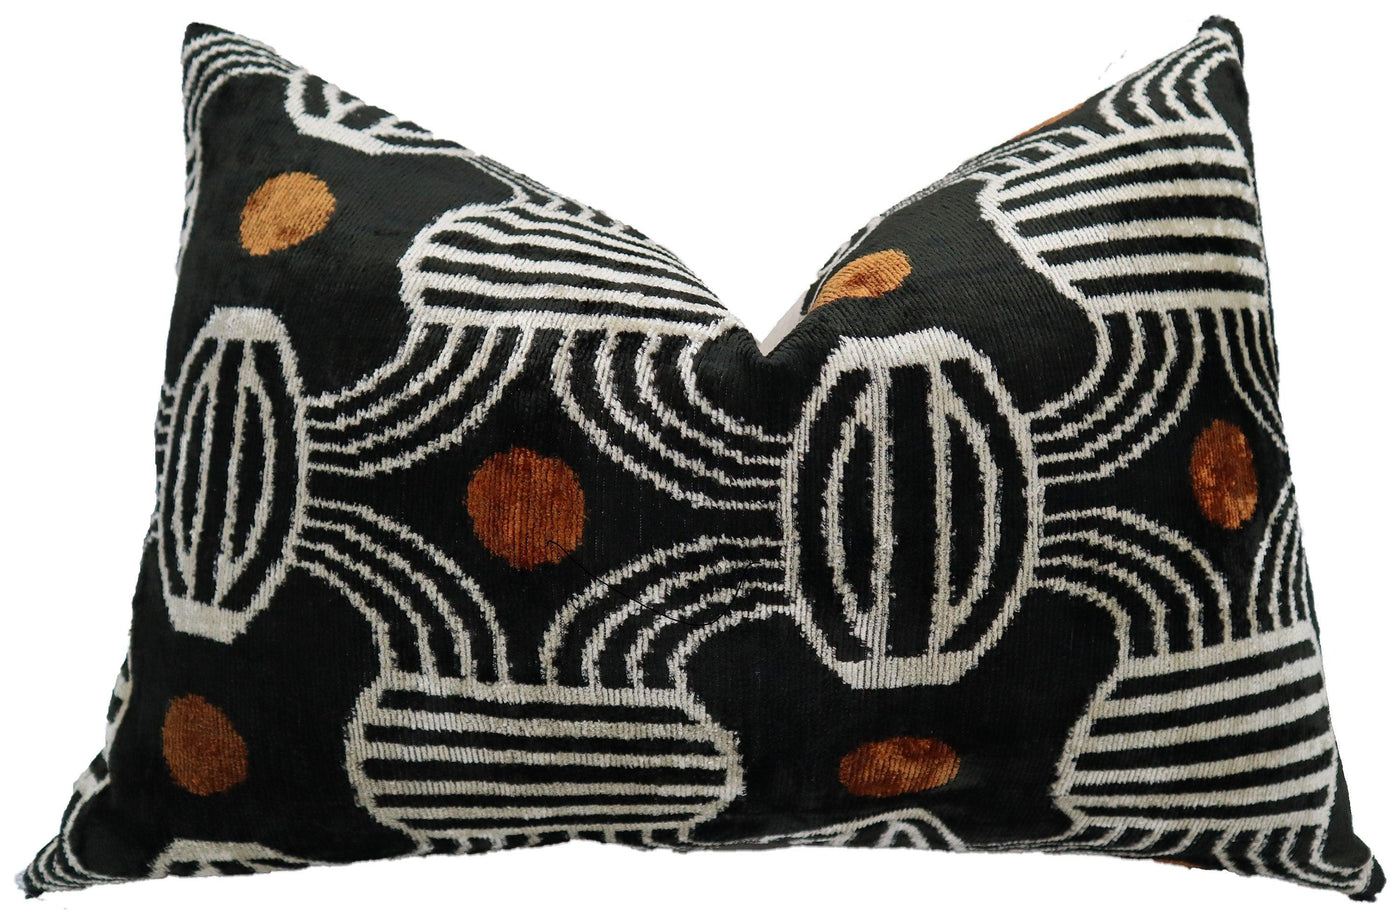 Canvello Luxury Decorative Black Throw Pillow | 16 x 24 in (40 x 60 cm)